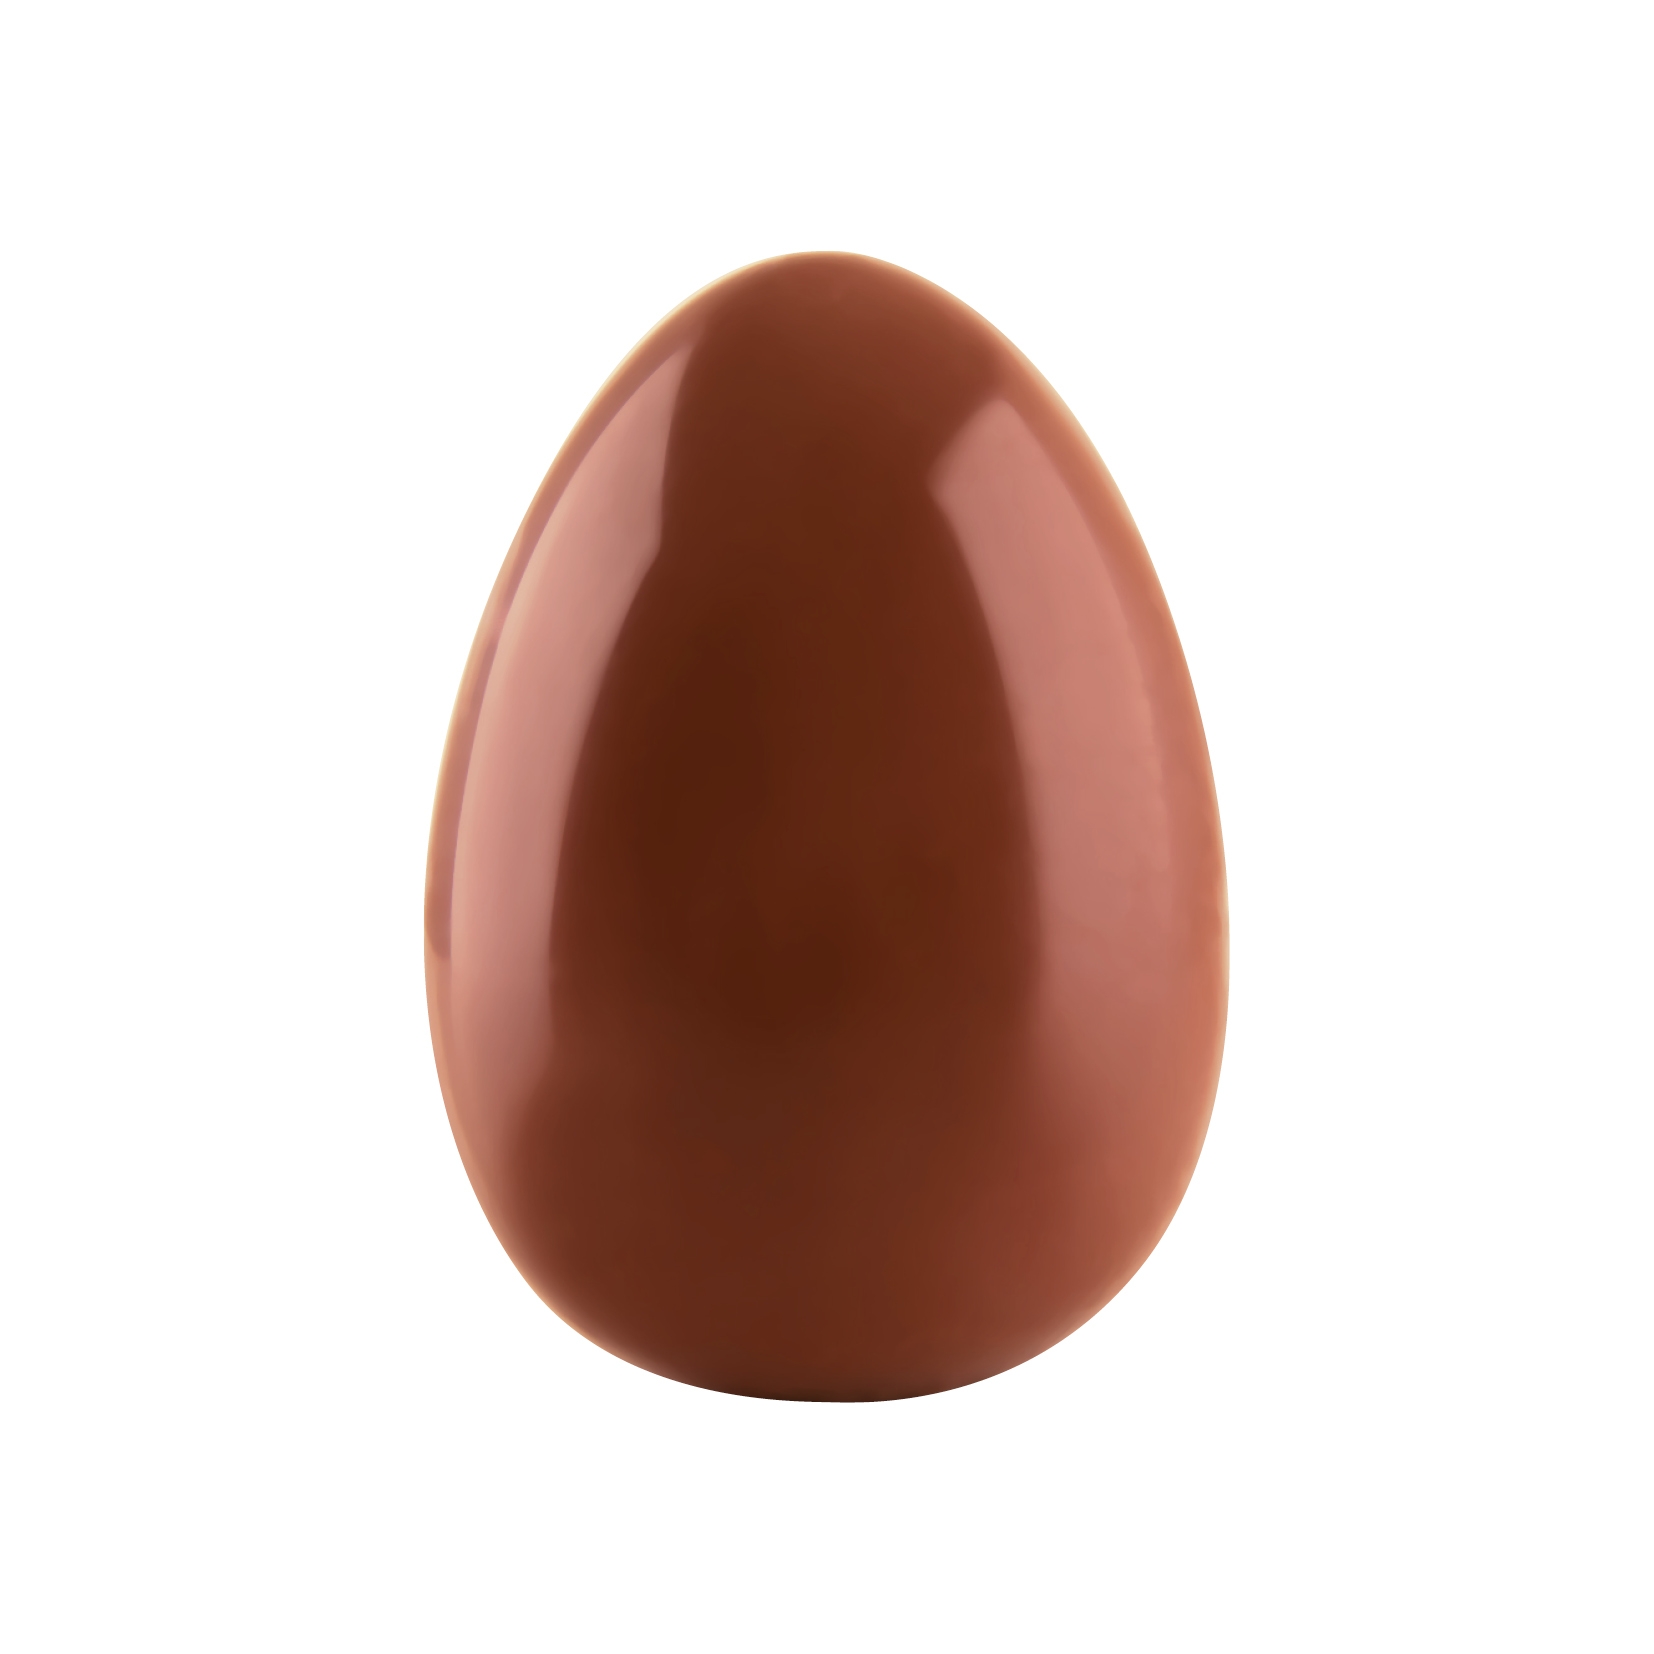 Форма для шоколада «Яйцо» поликарбонатная 20U150N, 2 ячейки, 15x10,4 см, Martellato, Италия  | Фото — Магазин Andy Chef  1